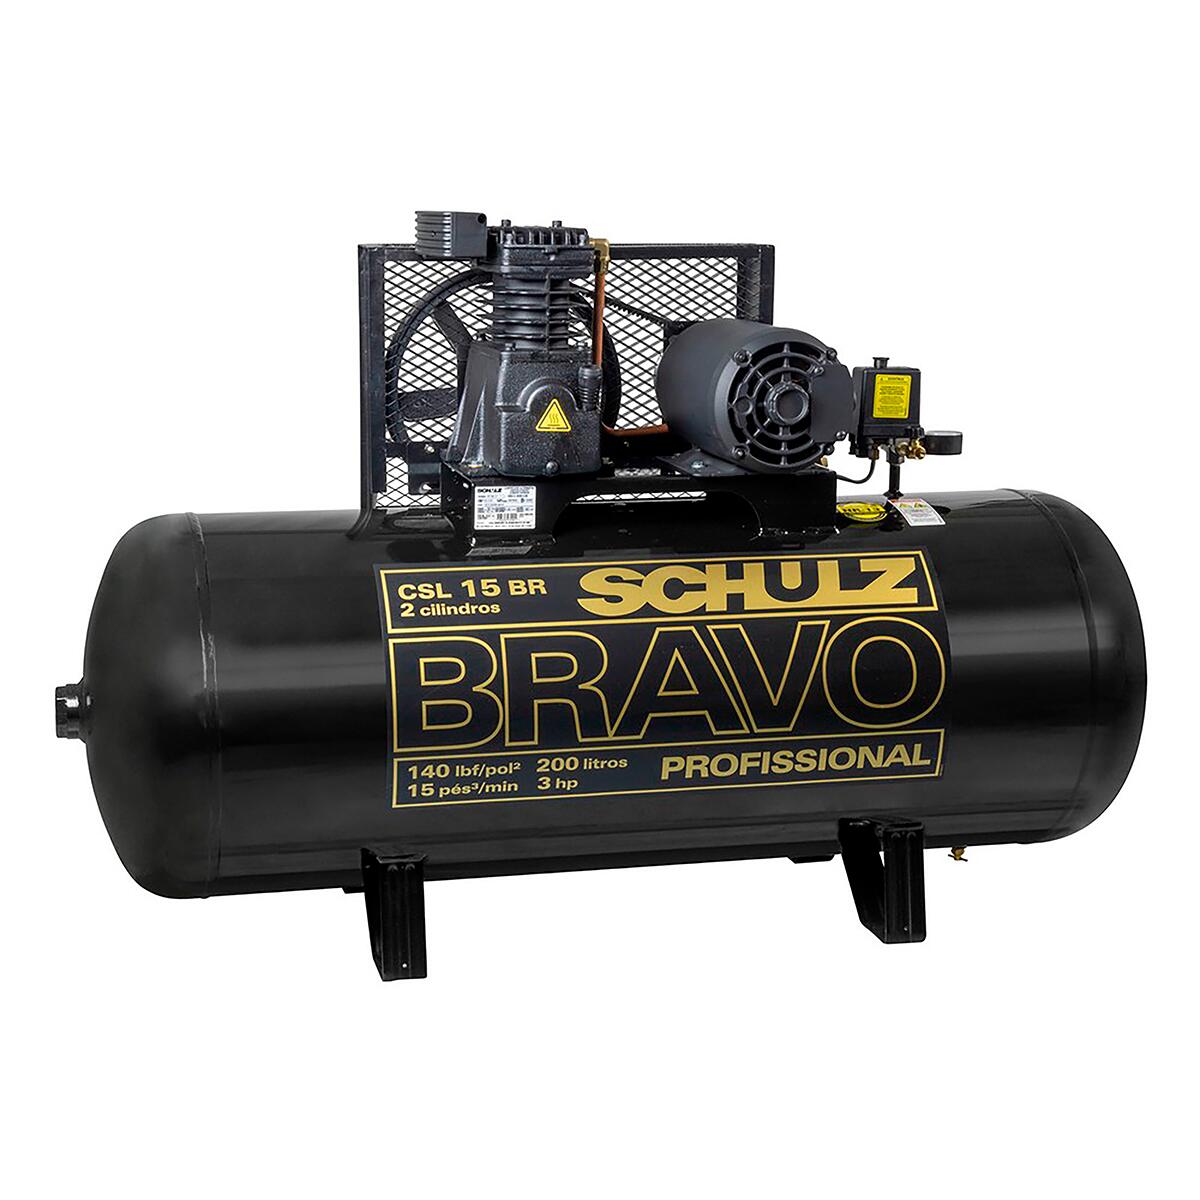 Compressor Bravo 3Hp Csl15Br 110/220V Schulz